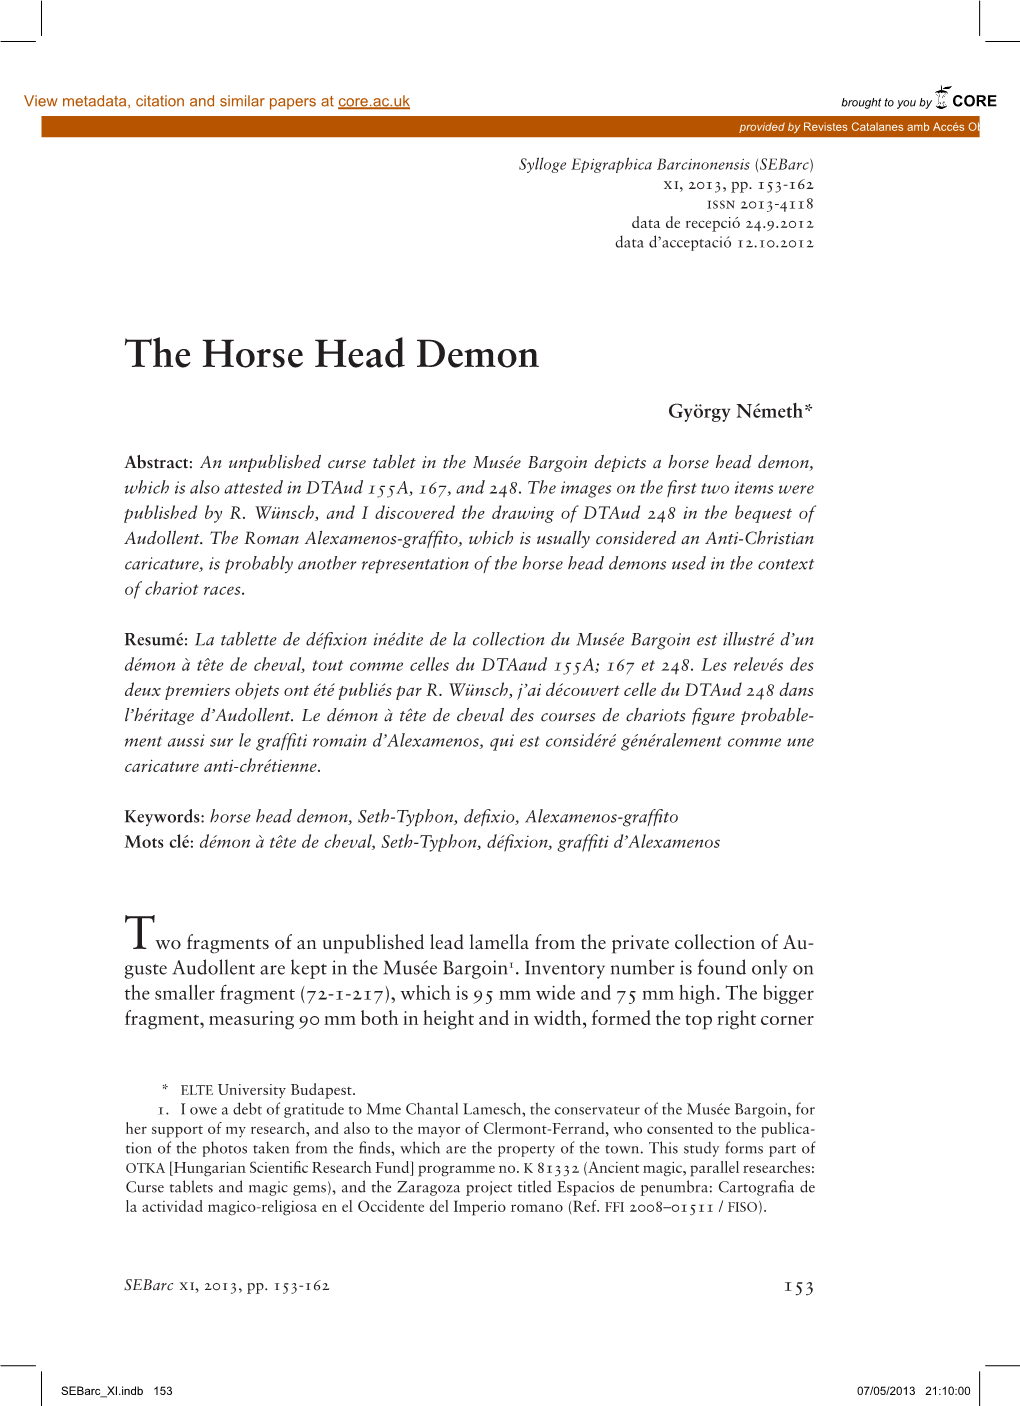 The Horse Head Demon